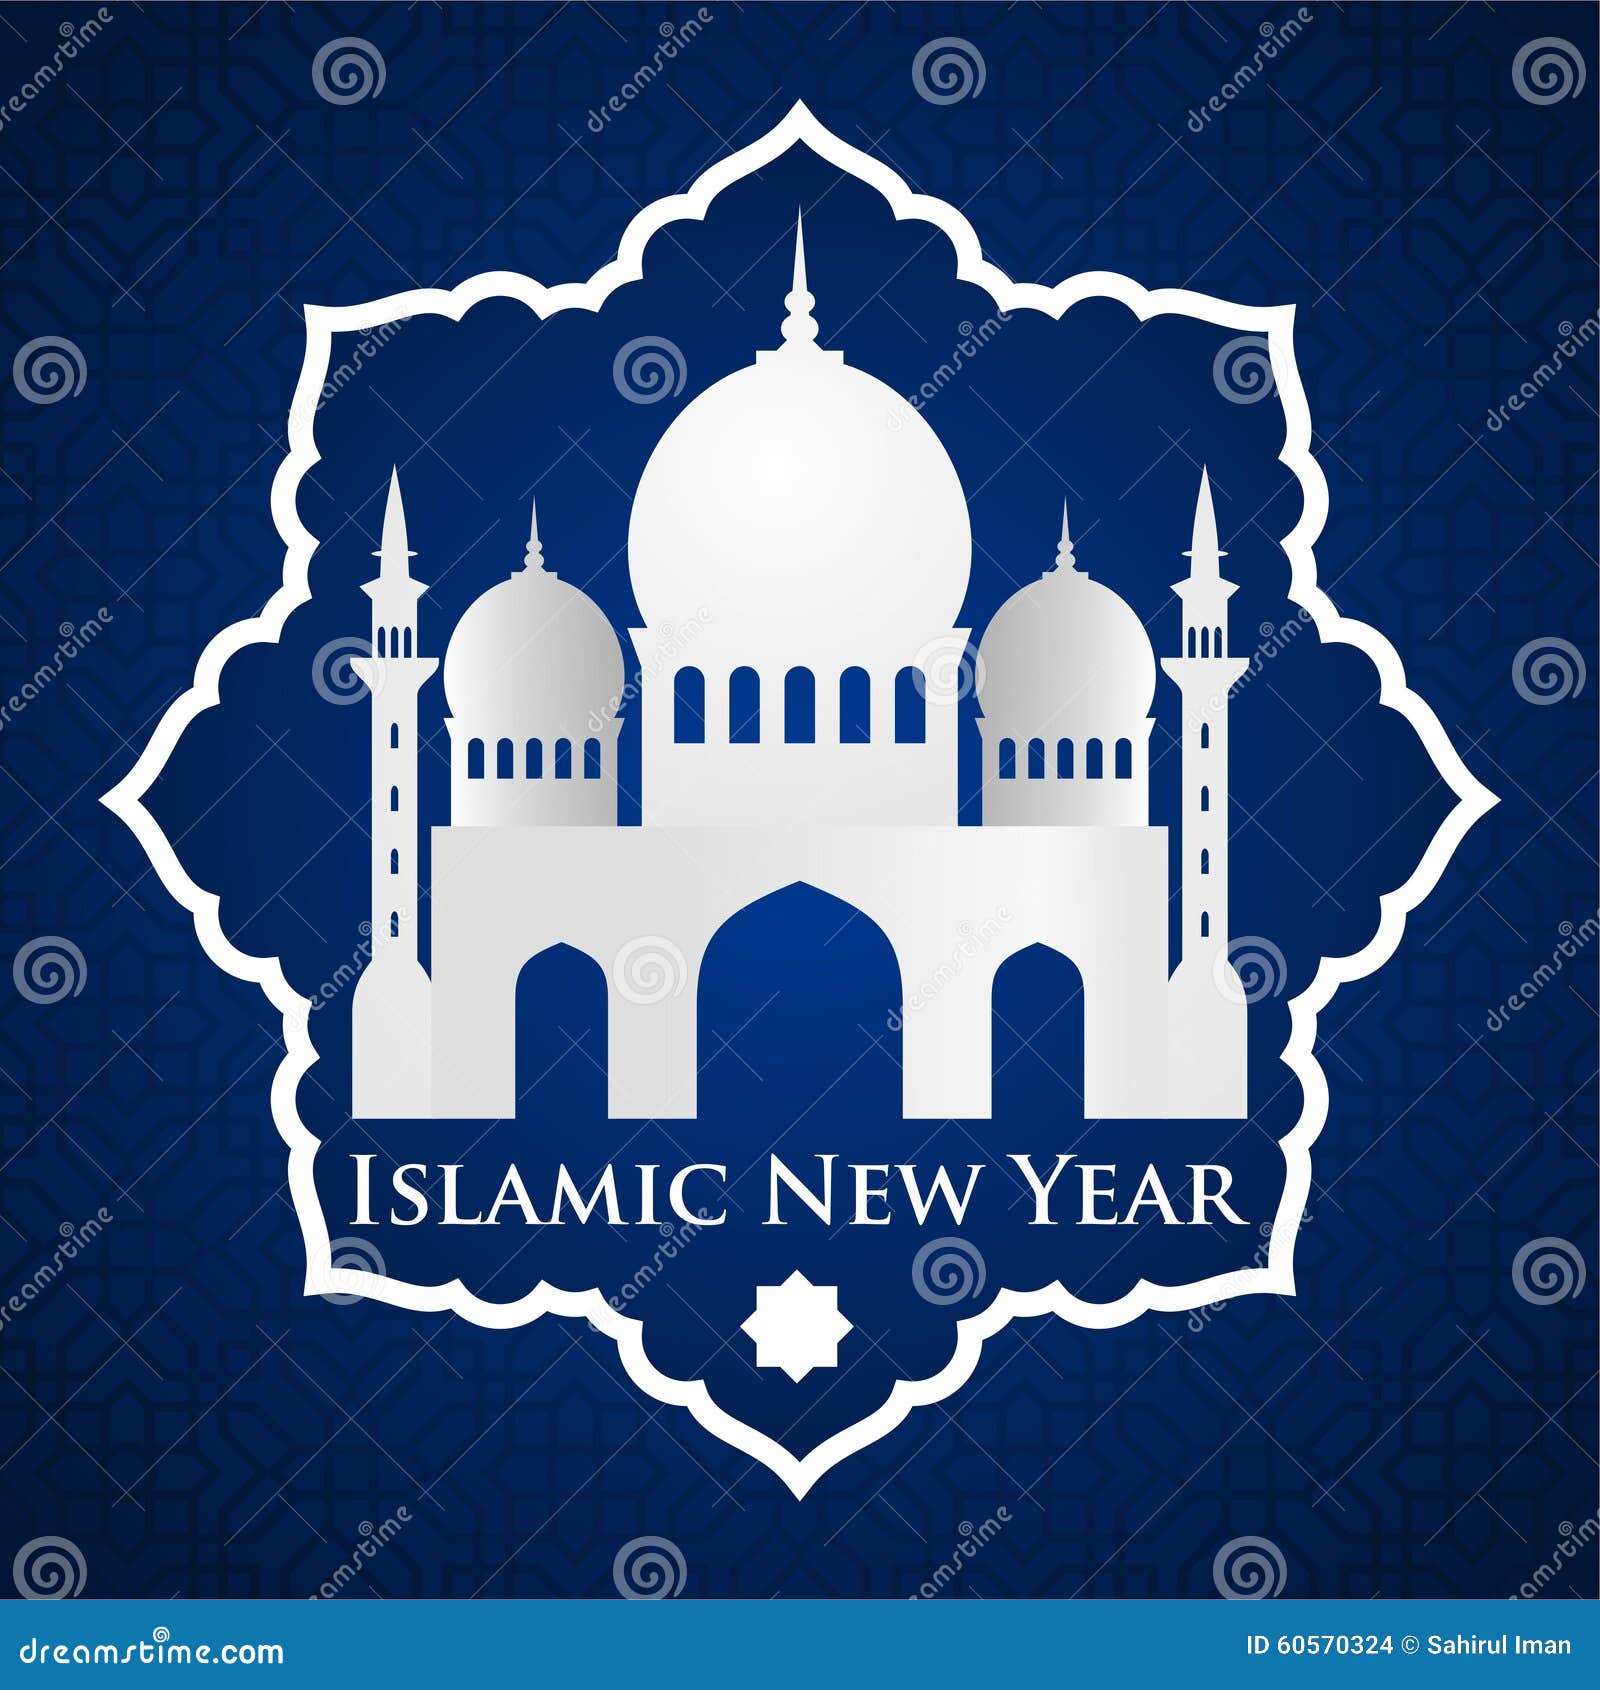 Islamic New Year Vector Template Stock Illustration  